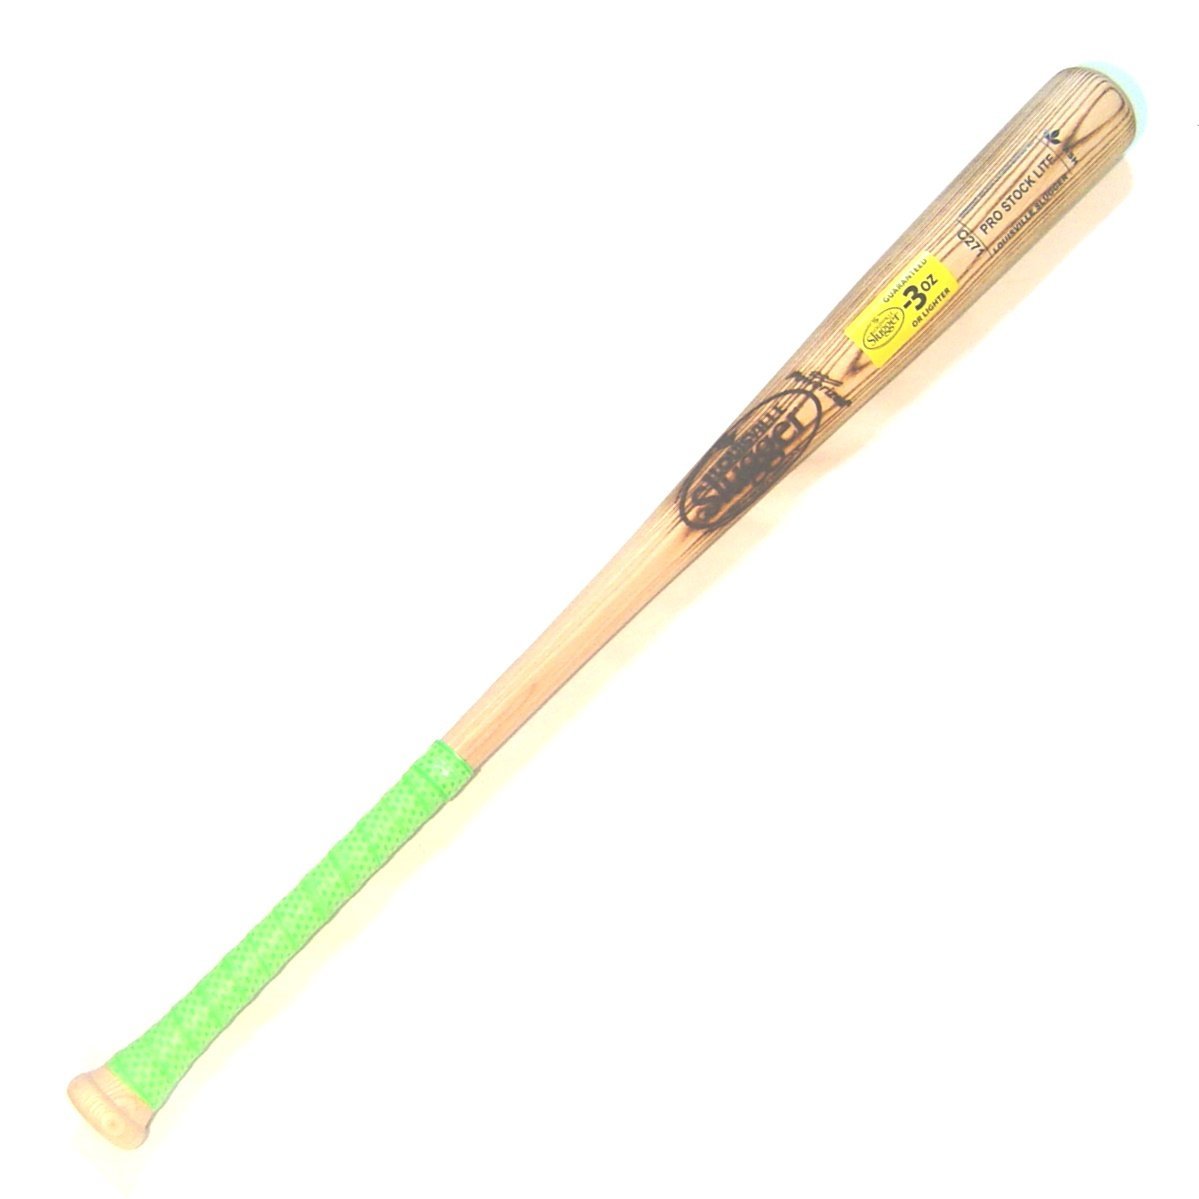 louisville-slugger-pro-lite-wood-baseball-bat-c271-unfin-green-lizard-grip-33-nch WBPL271-UF33GR Louisville 044277145101 The Louisville Slugger Pro Stock Lite Wood Bat Series is made